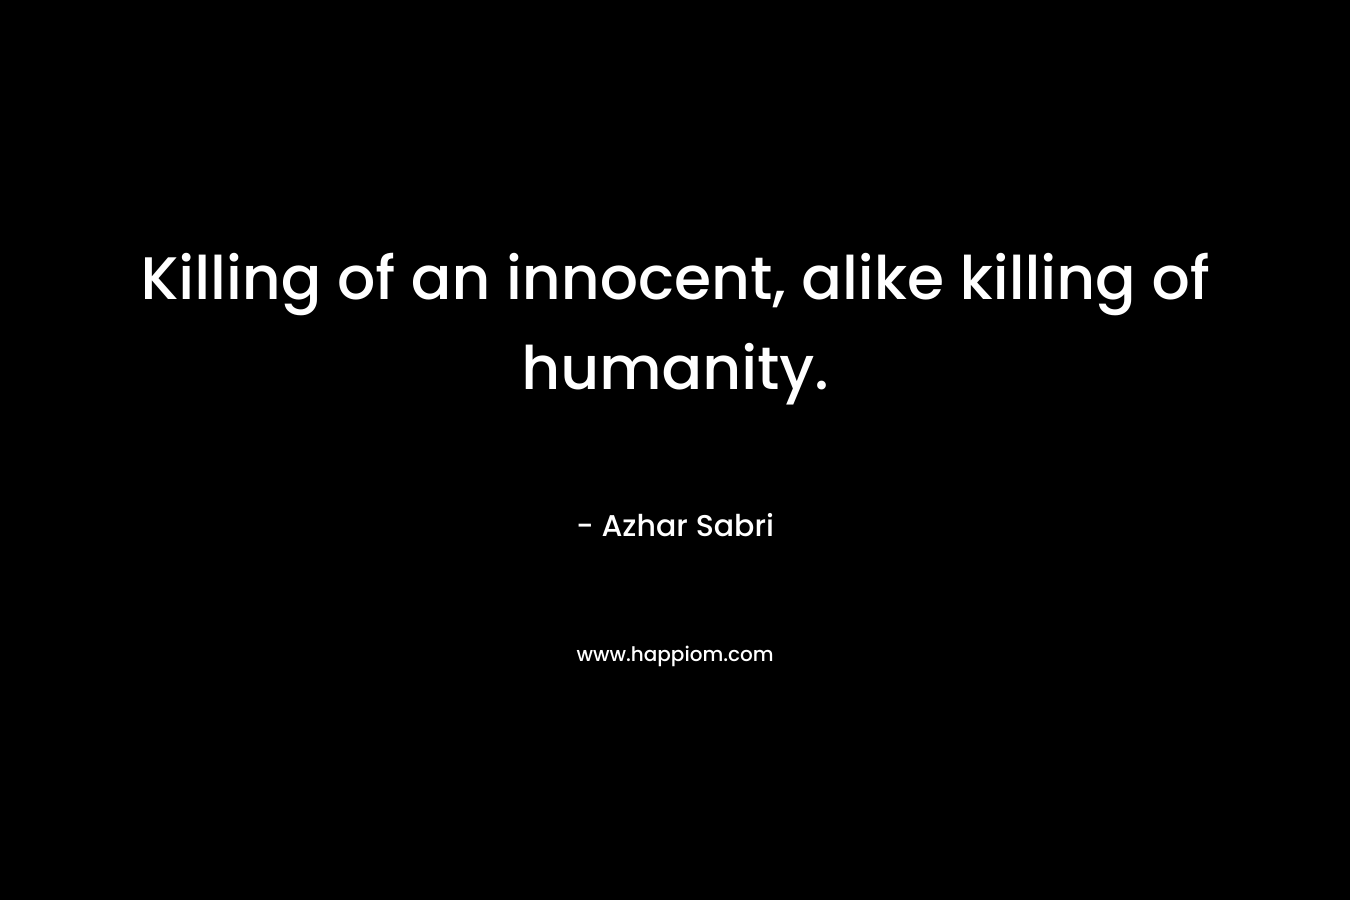 Killing of an innocent, alike killing of humanity.